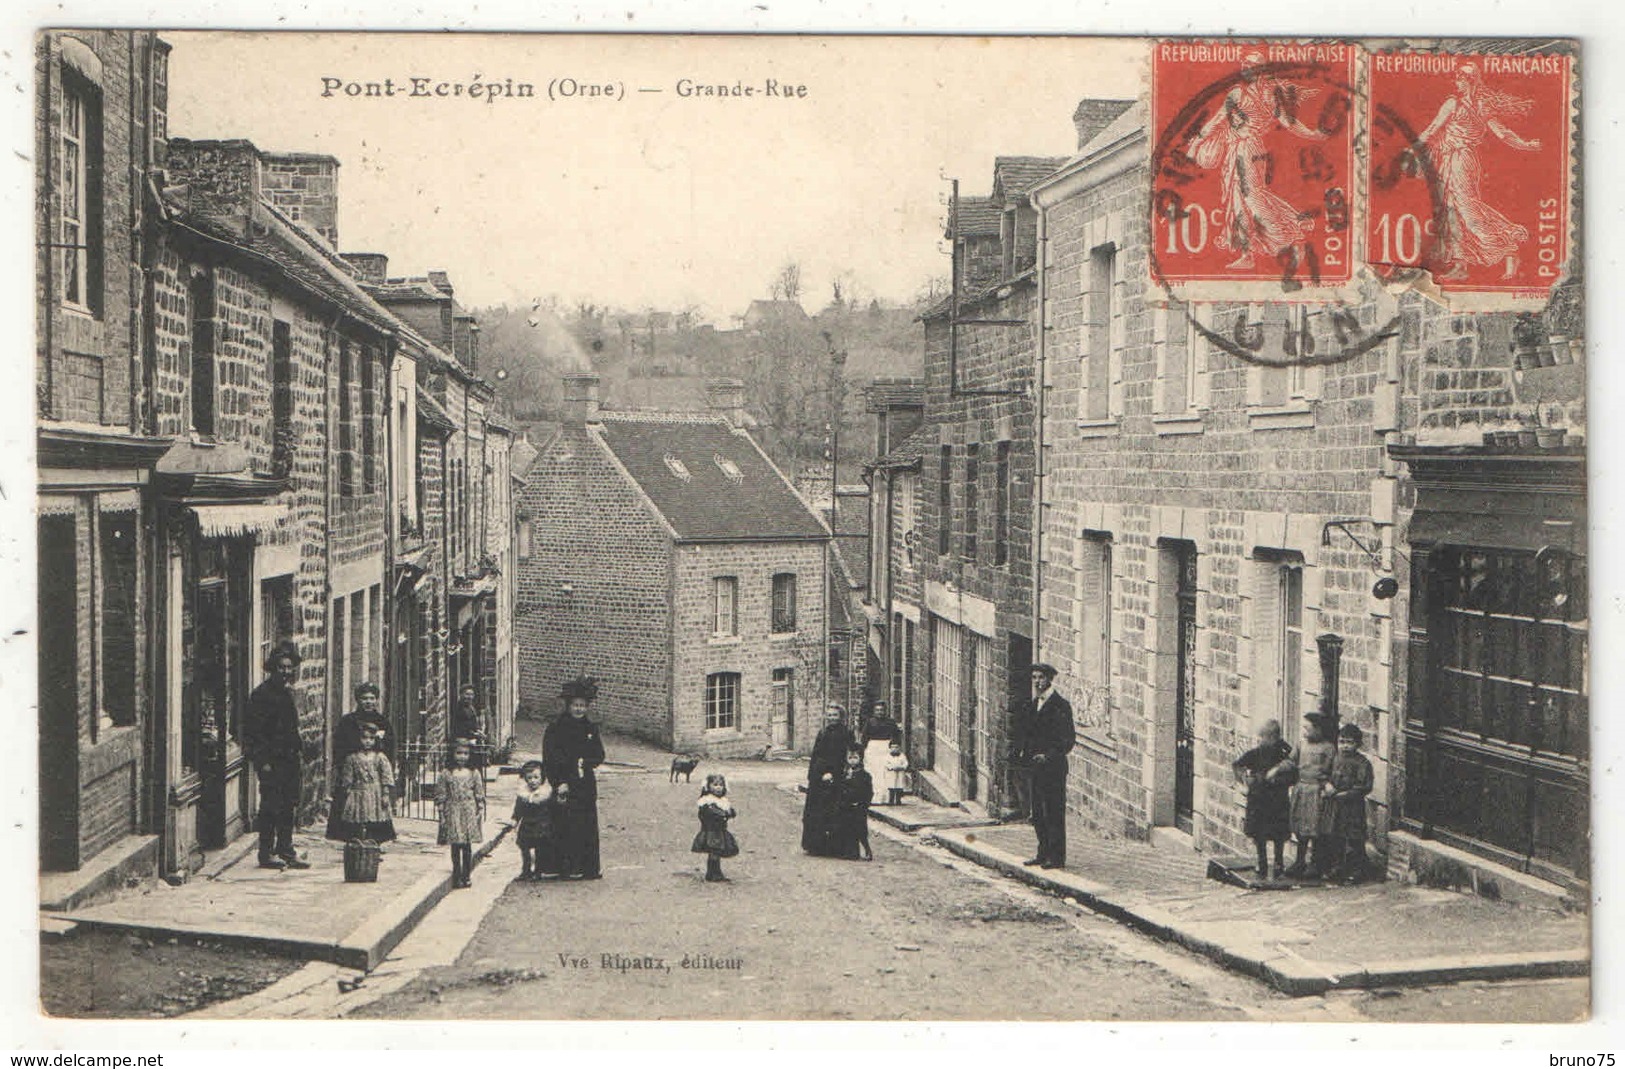 61 - PONT-ECREPIN - Grande-Rue - Edition Ripaux - 1921 - Pont Ecrepin